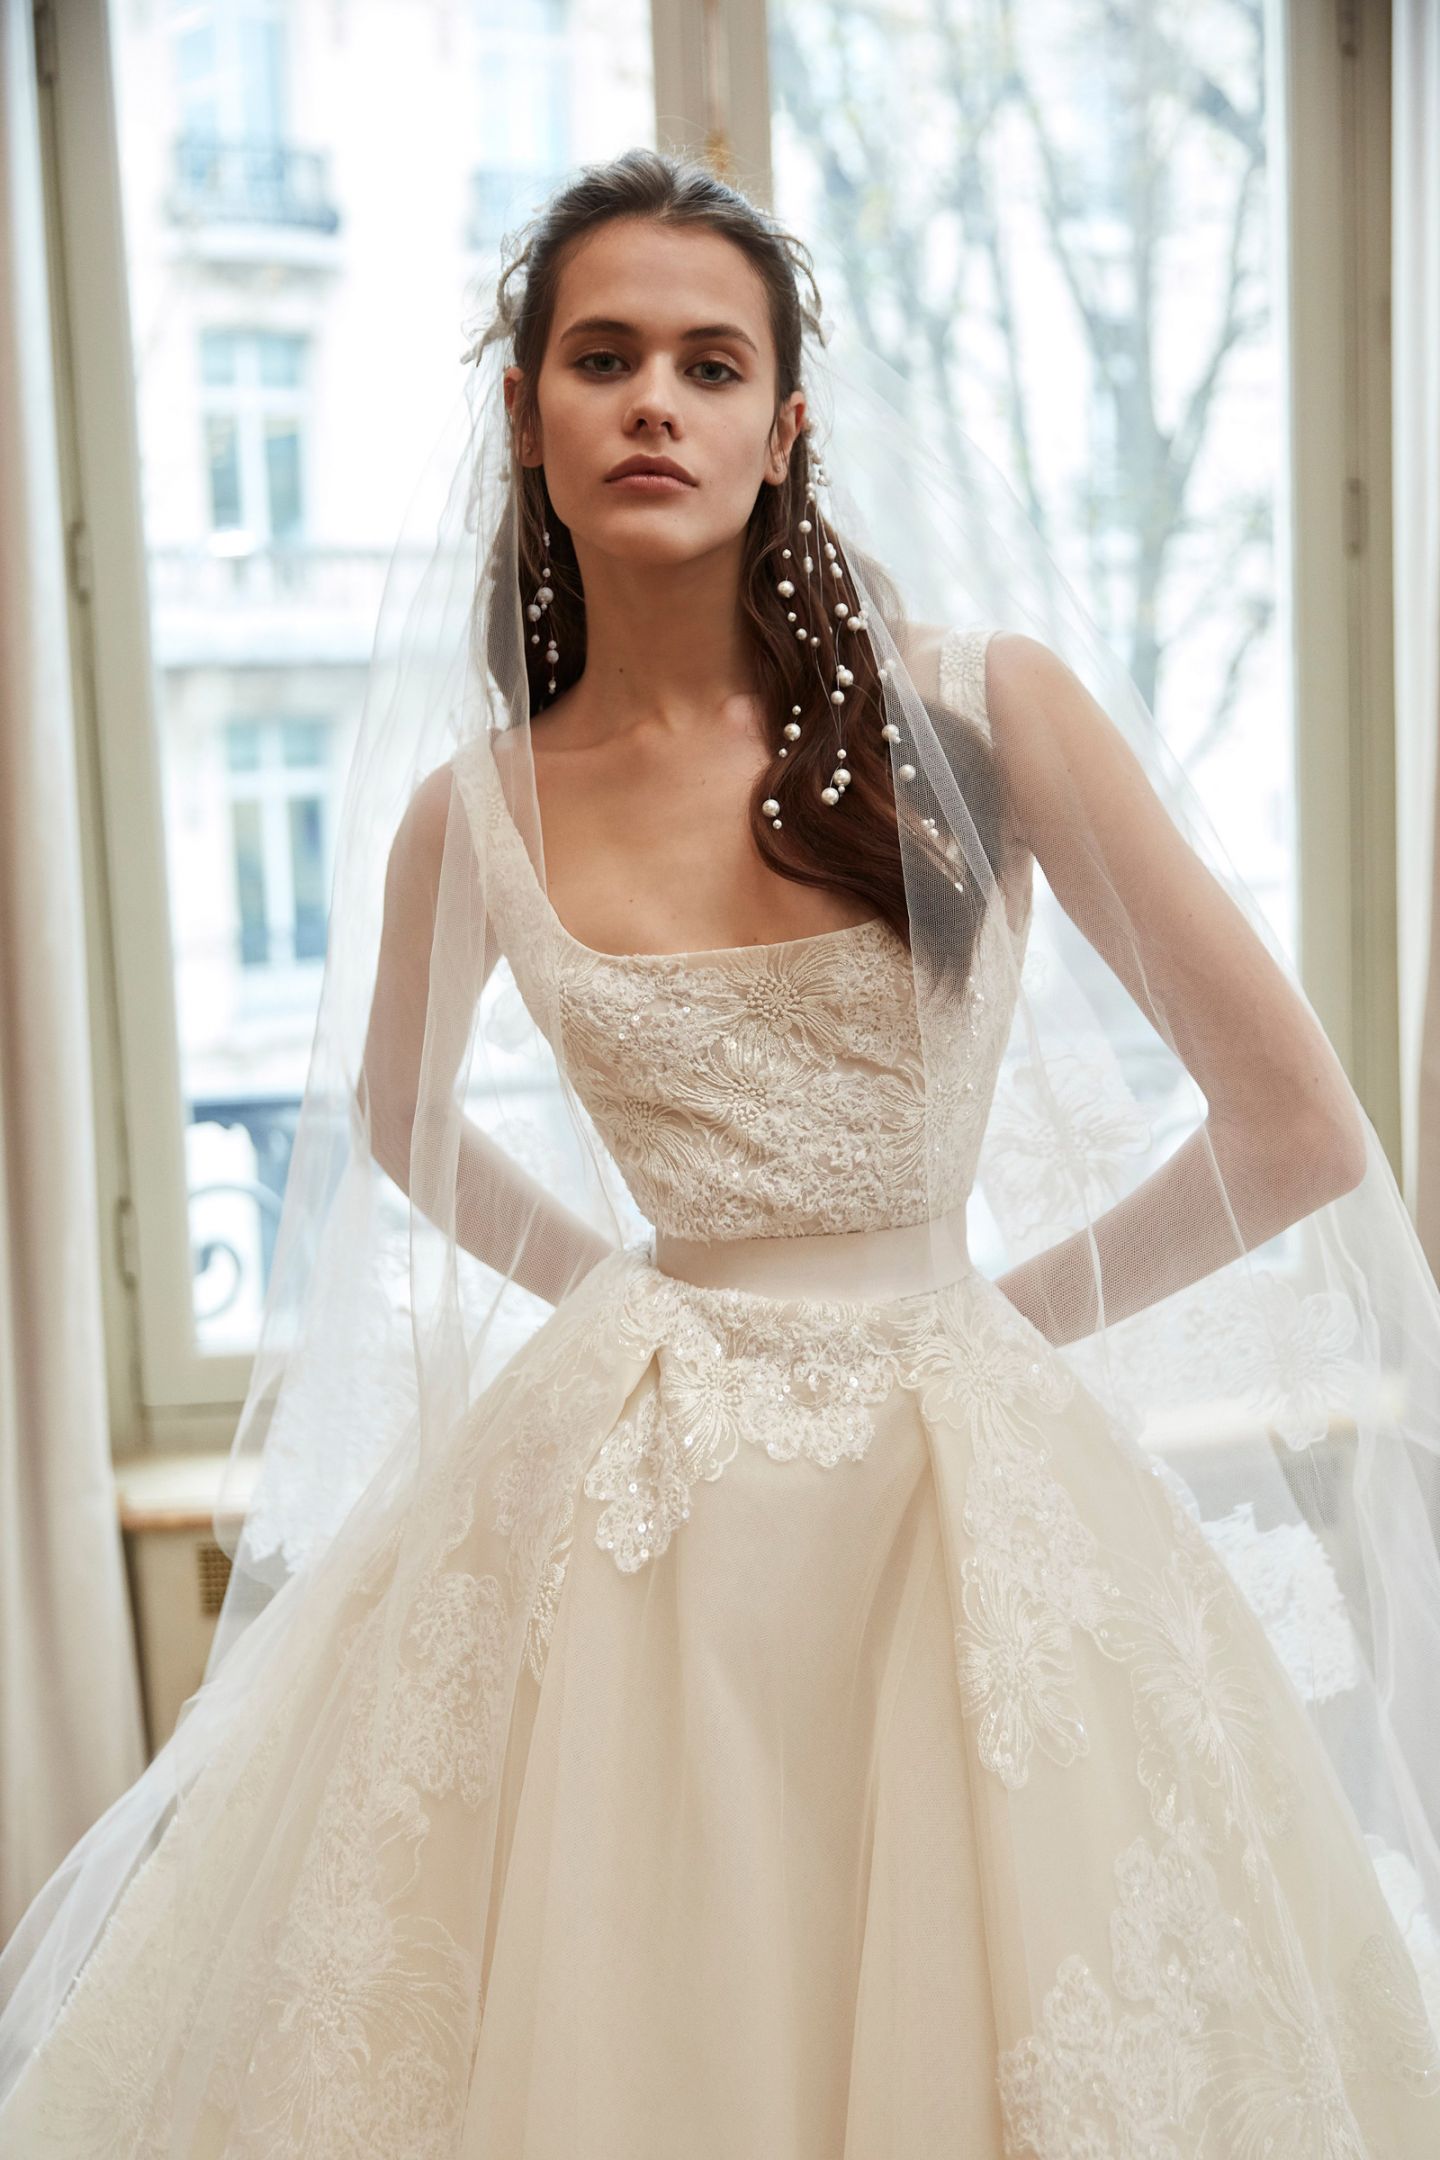 Elie Saab's spring 2019 bridal collection